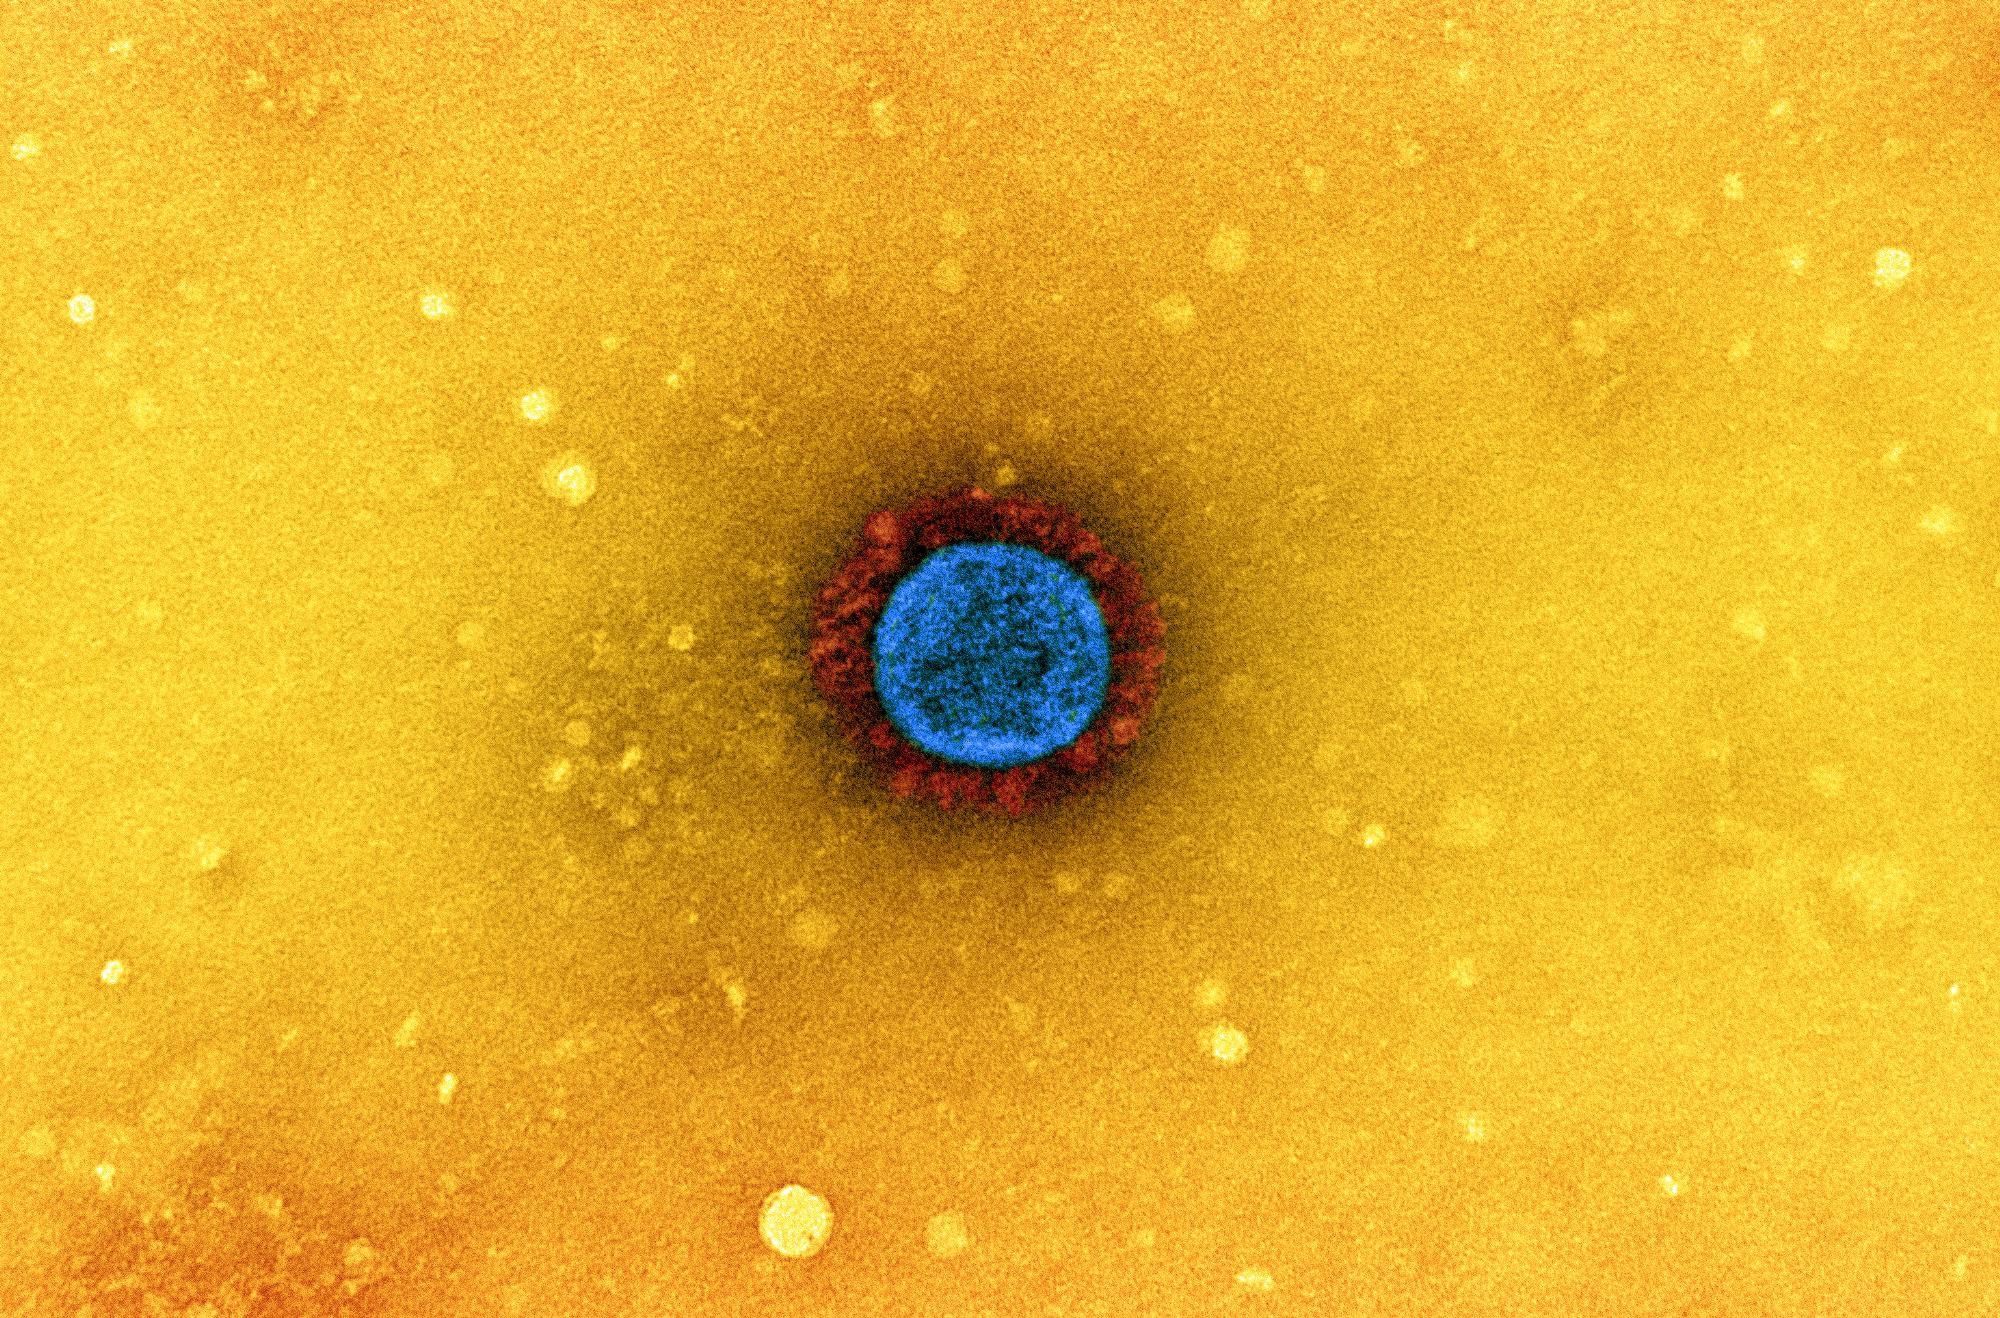 Study: Nirmatrelvir, Molnupiravir, and Remdesivir maintain potent in vitro activity against the SARS-CoV-2 Omicron variant. Image Credit: NIAID